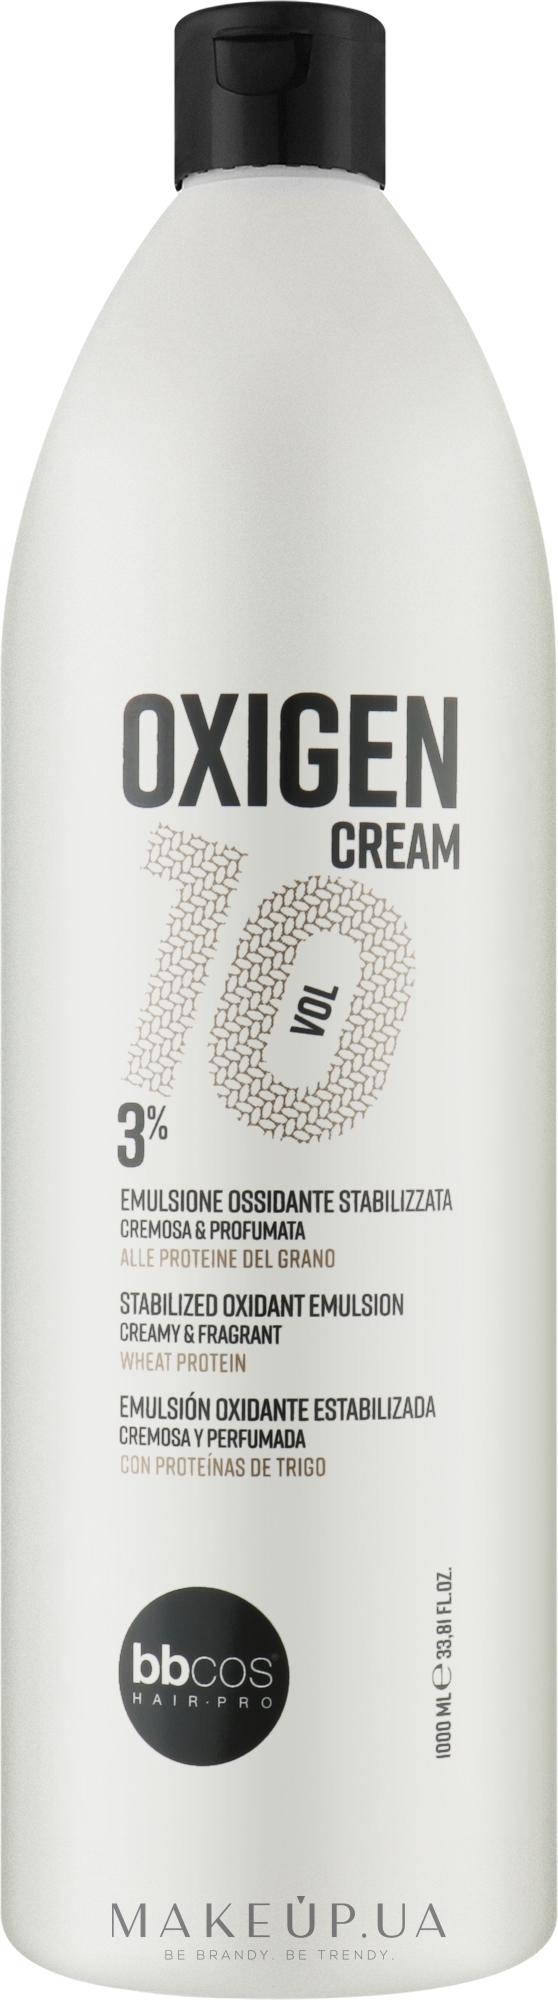 Окислювач кремоподібний 3% - BBcos Oxigen Cream 10 Vol — фото 1000ml